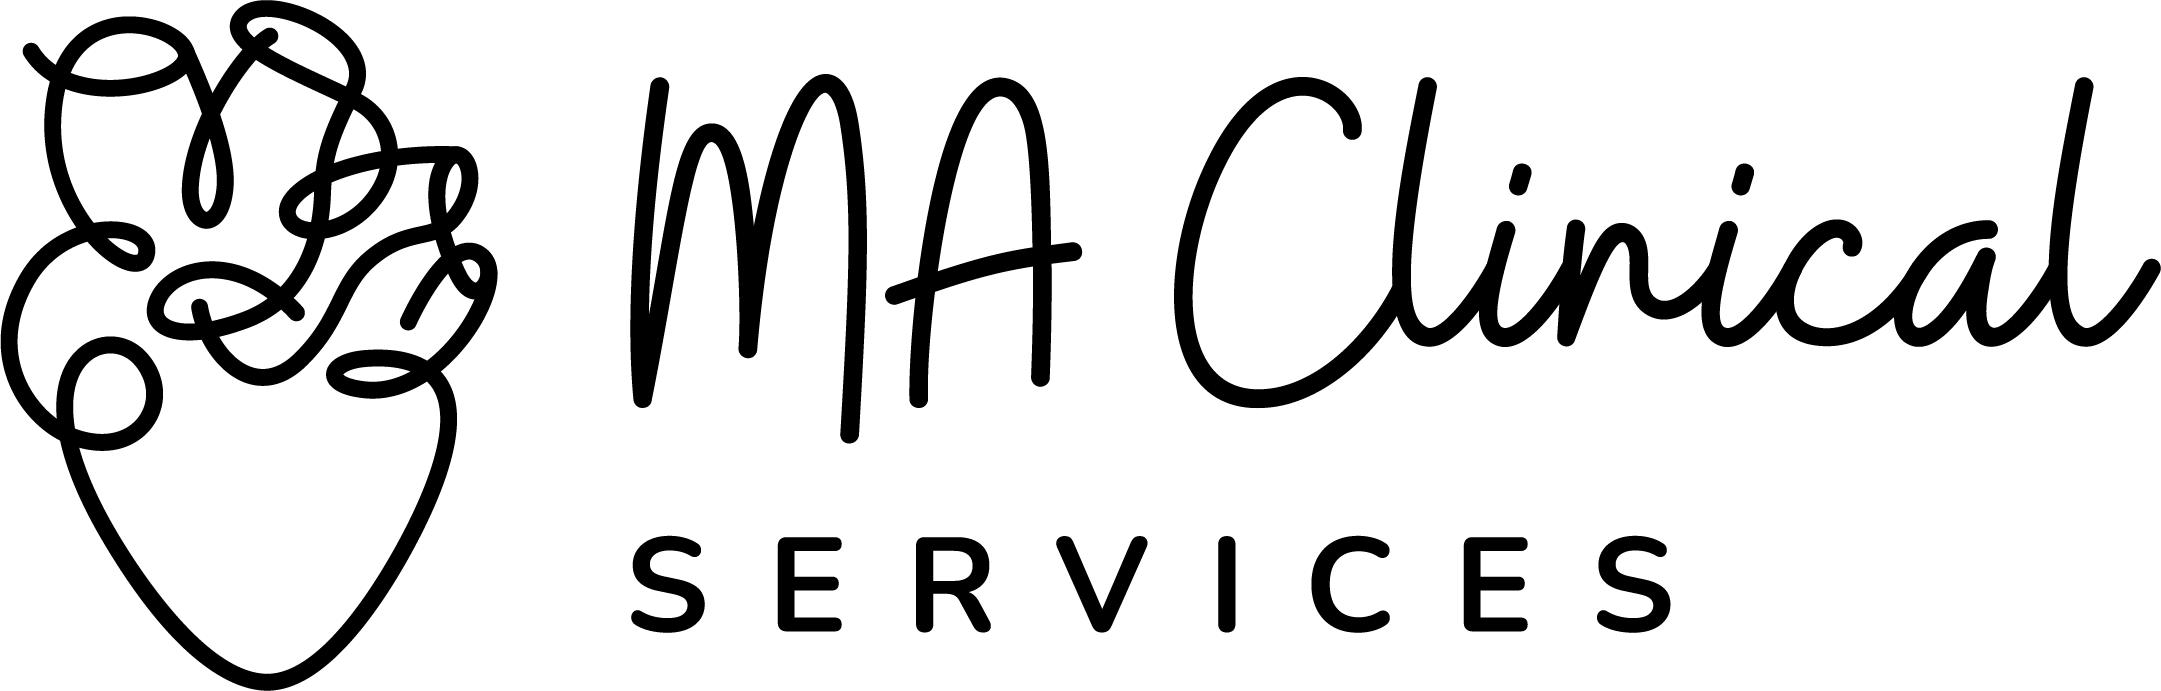 Maclinical Logo Black